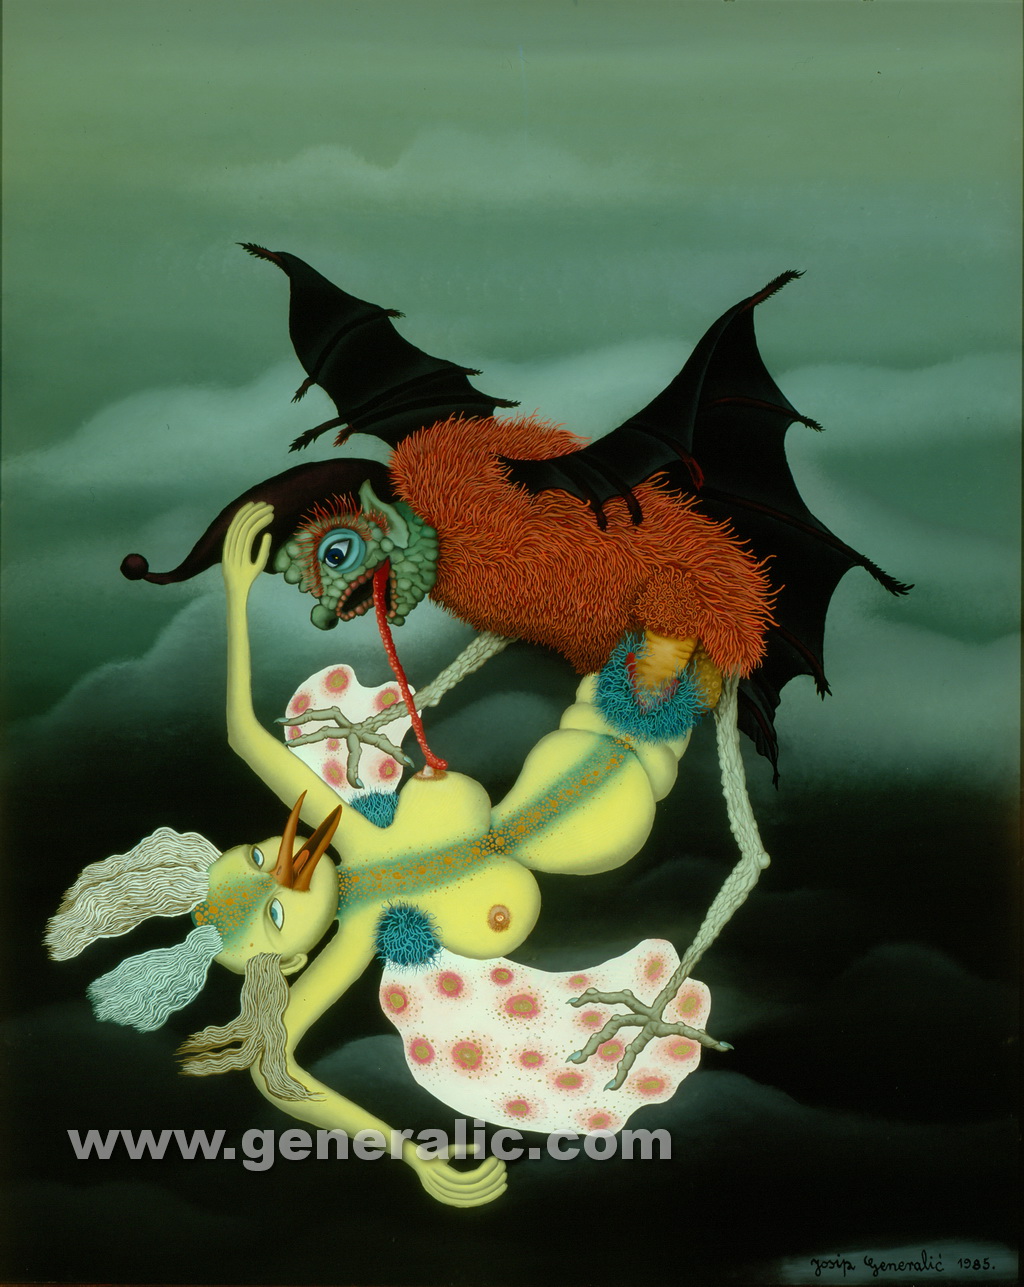 Josip Generalic, 1985, Love between Butterfly woman and a bat, oil on glass, 100x80 cm